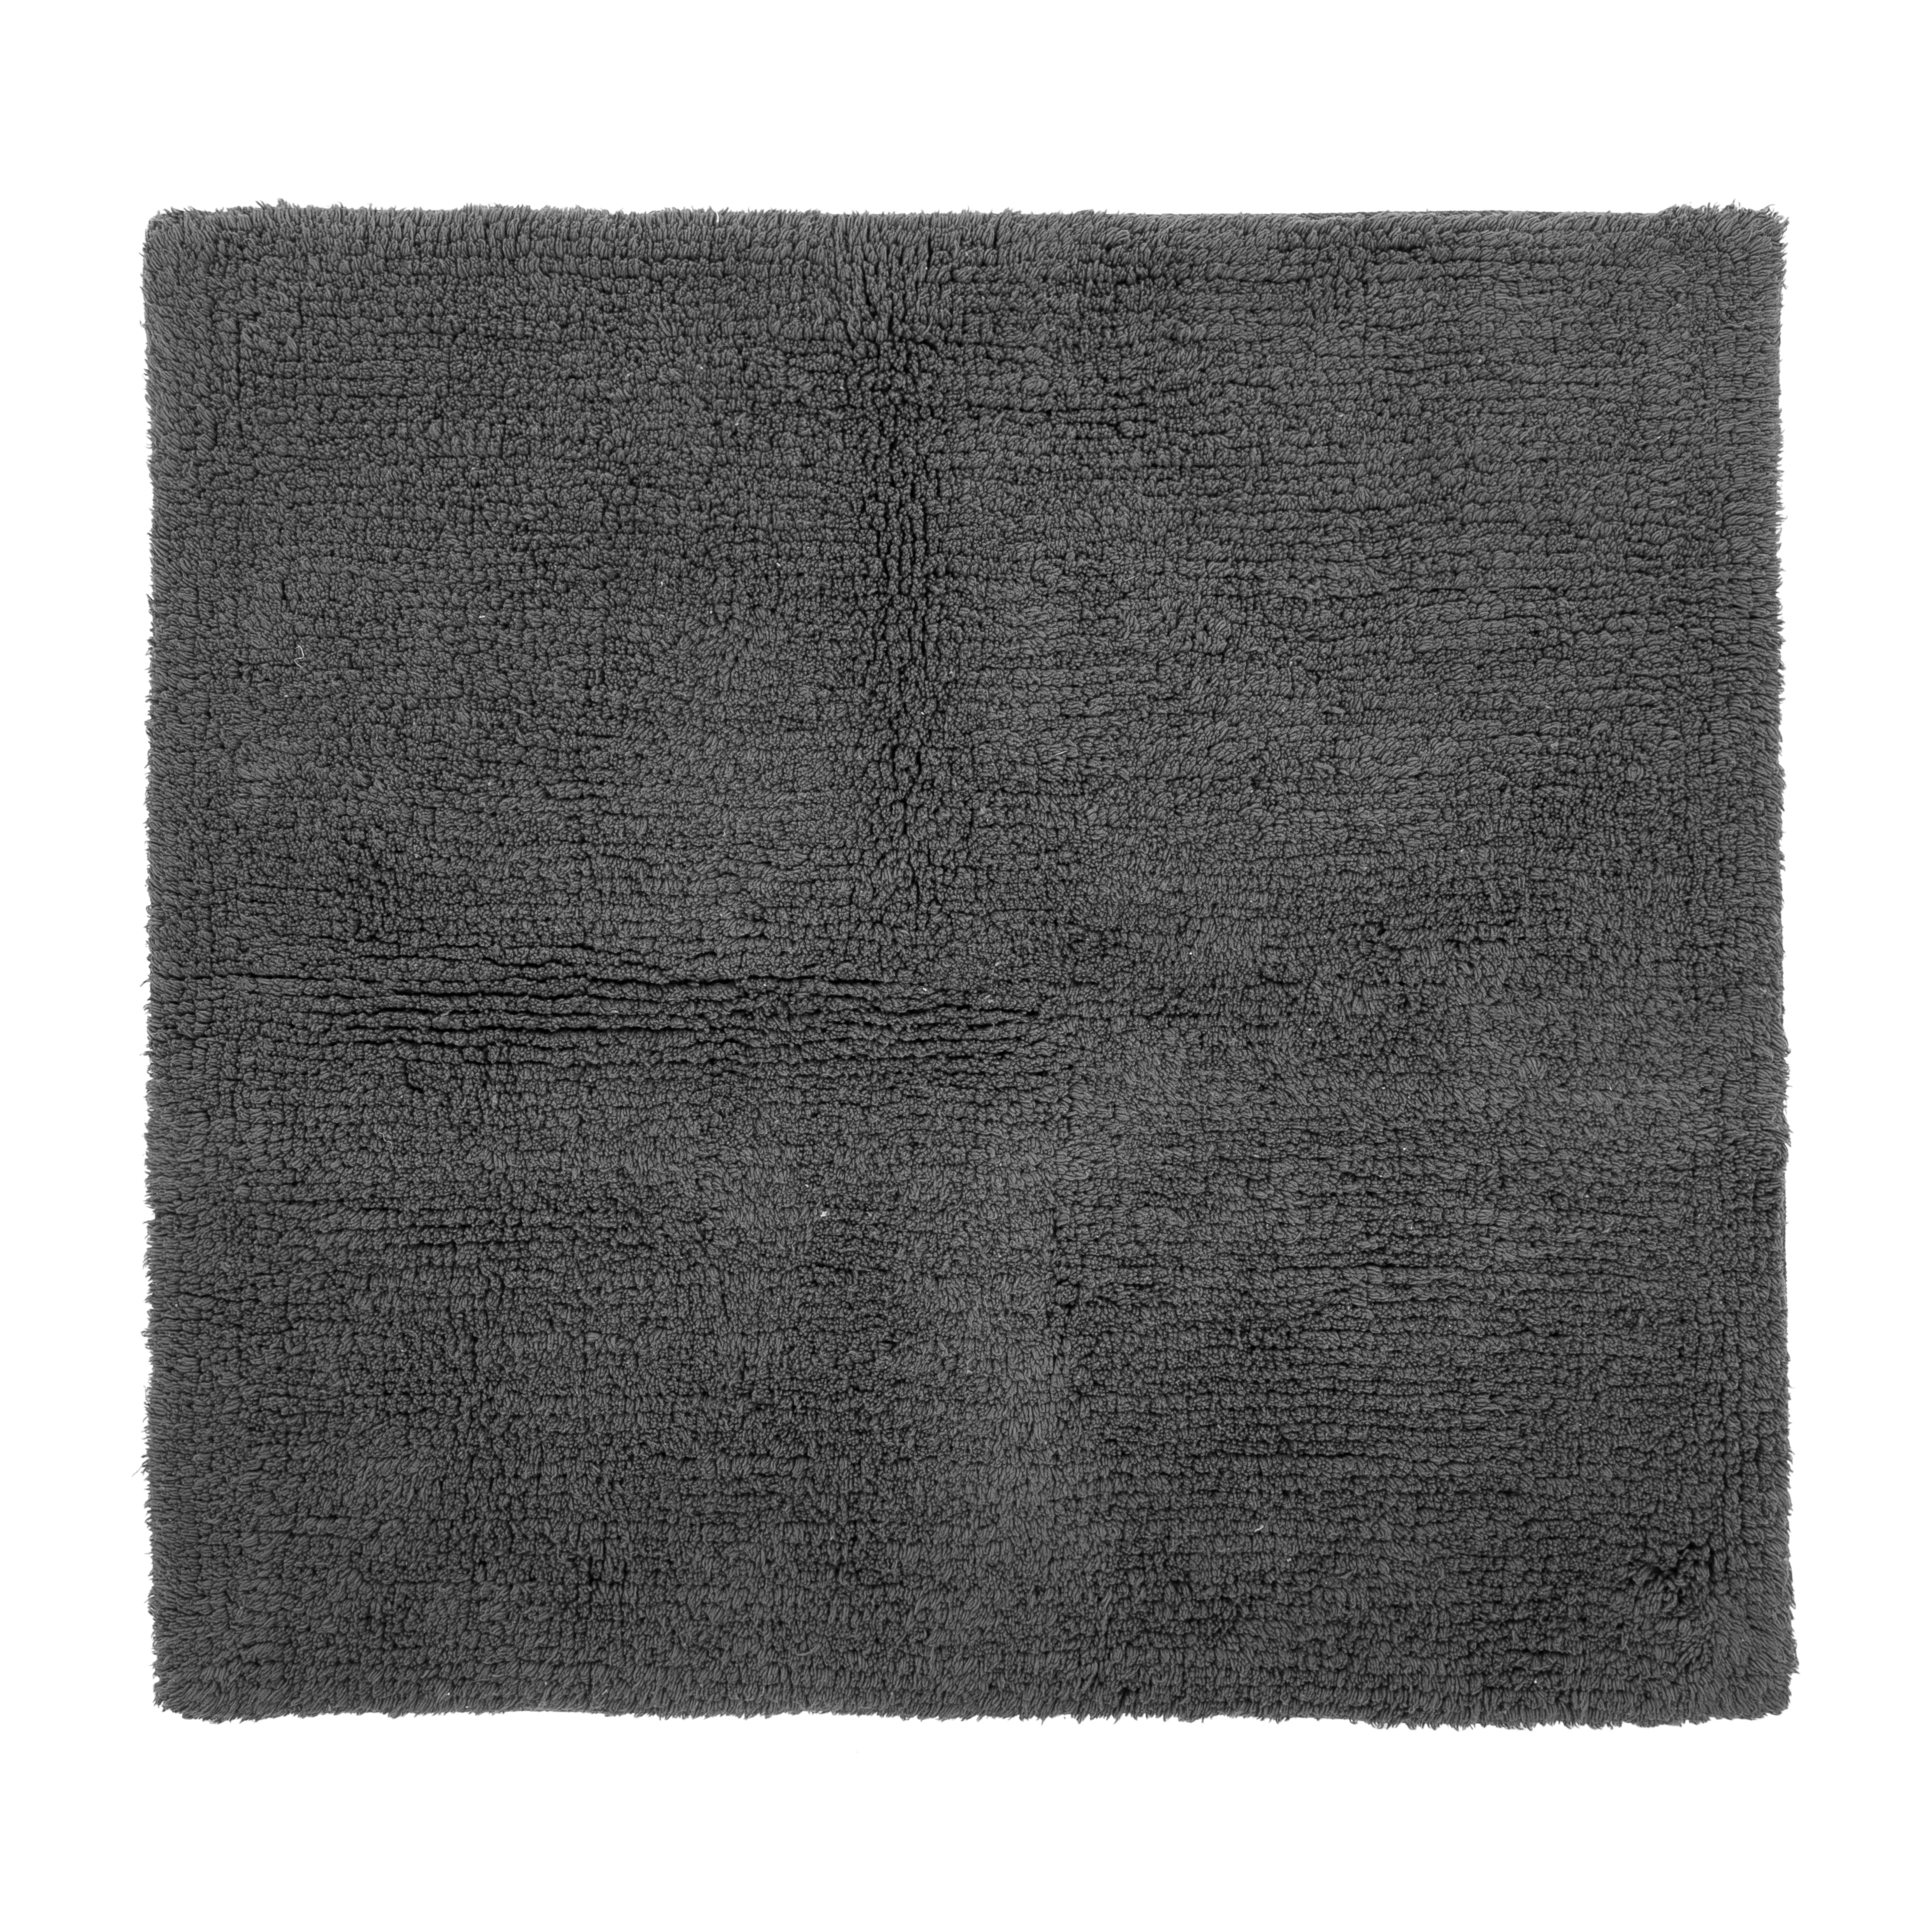 RIVA tapis de bain - coton antidérapant, 60x60cm, gris